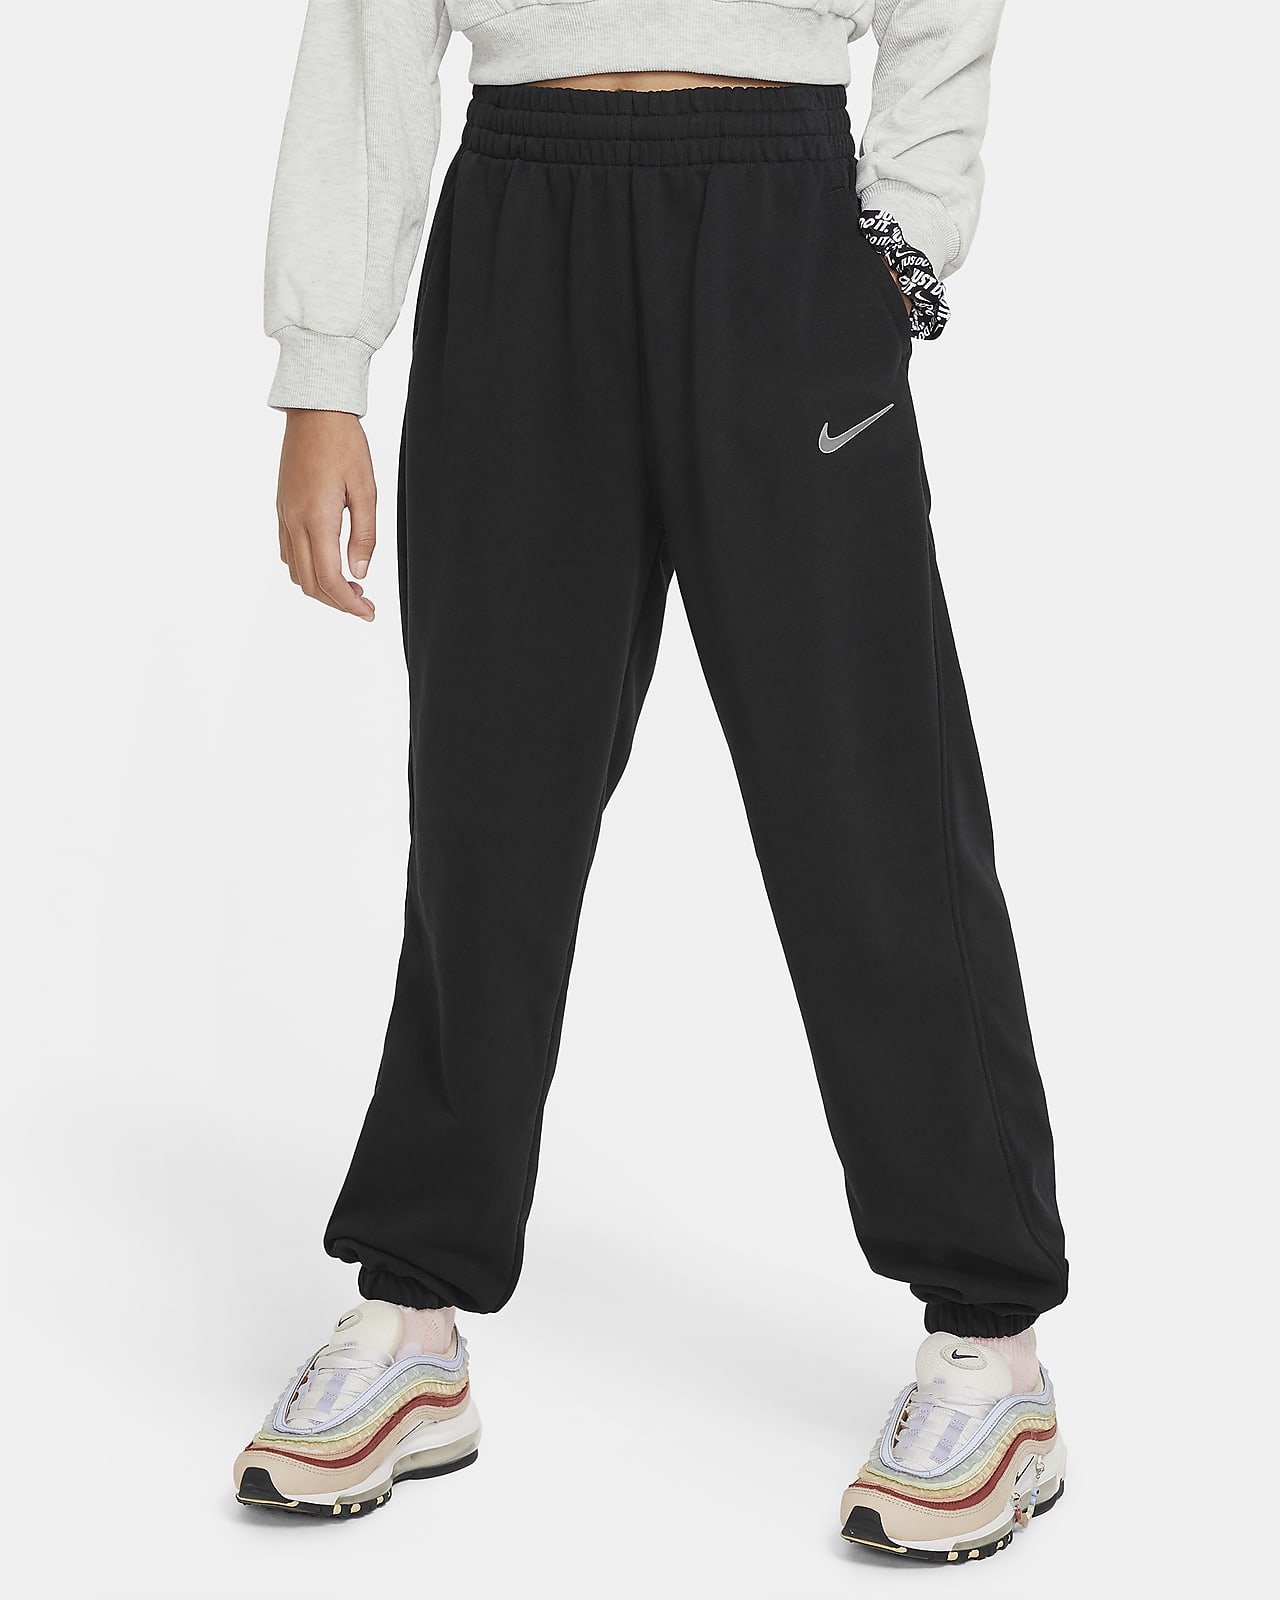 Nike Sportswear Dri-FIT ledig joggebukse til store barn (jente)